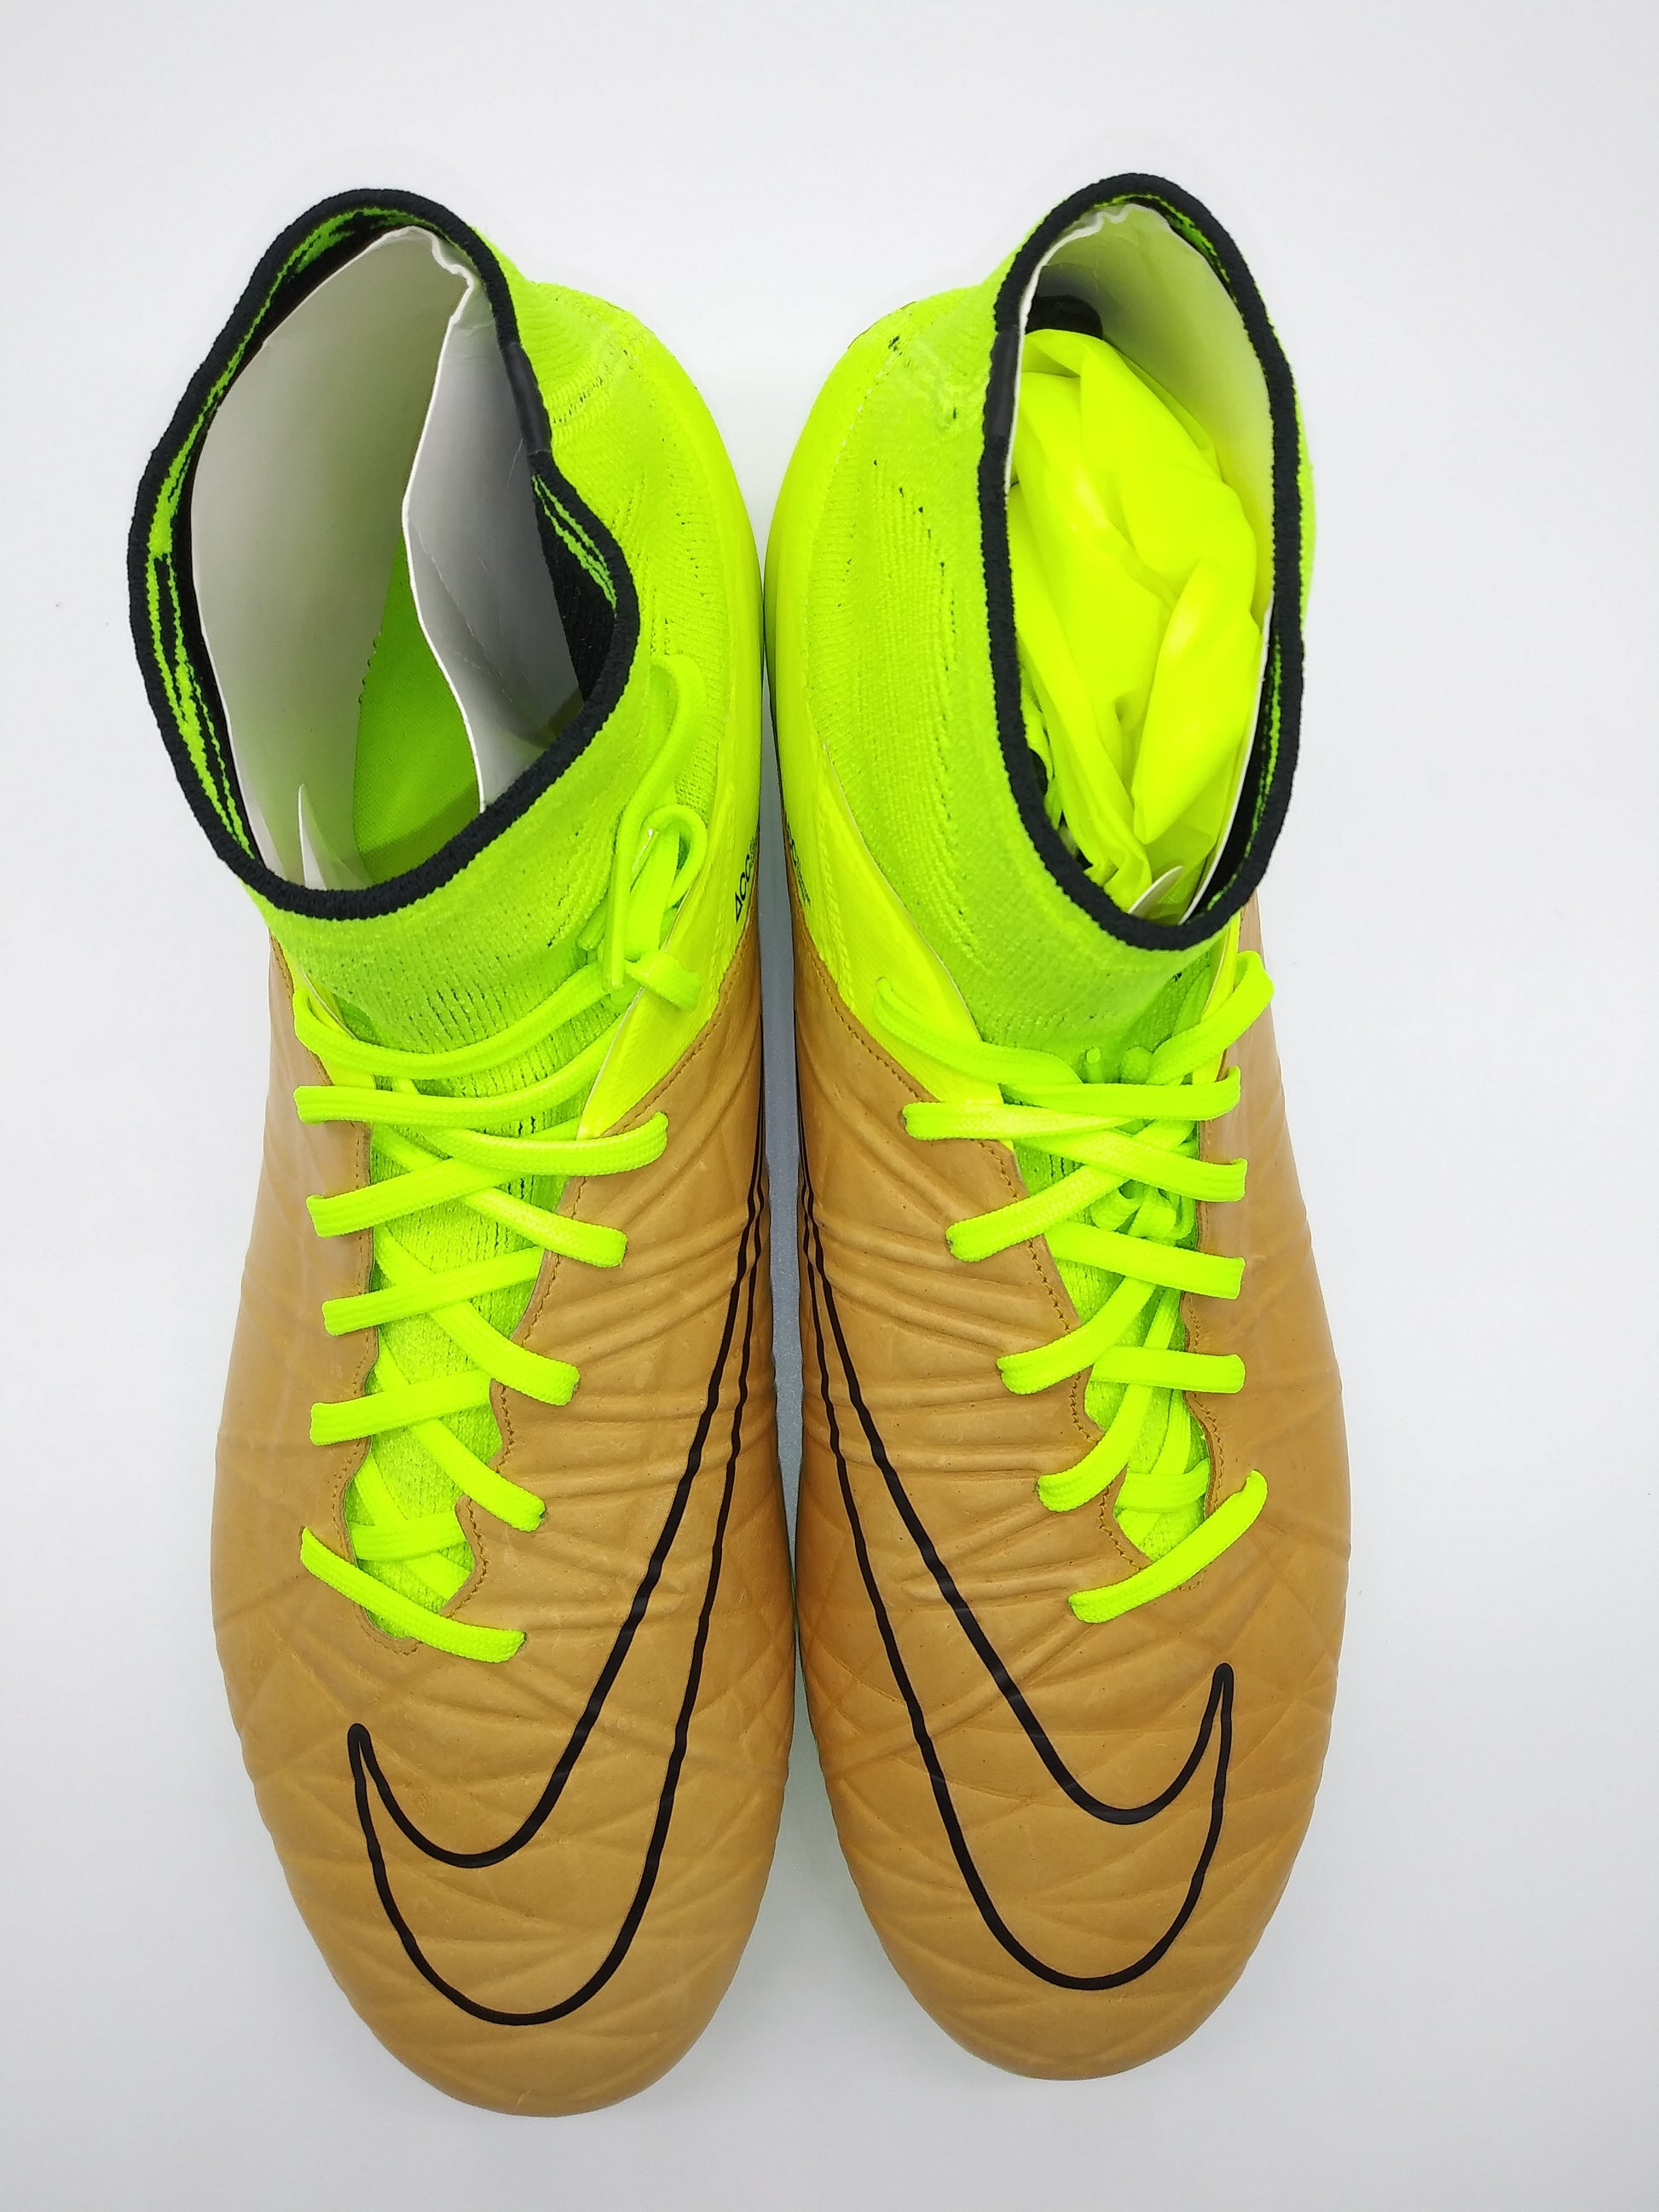 pollo autor No autorizado Nike Hypervenom Phantom II FG Brown Yellow – Villegas Footwear